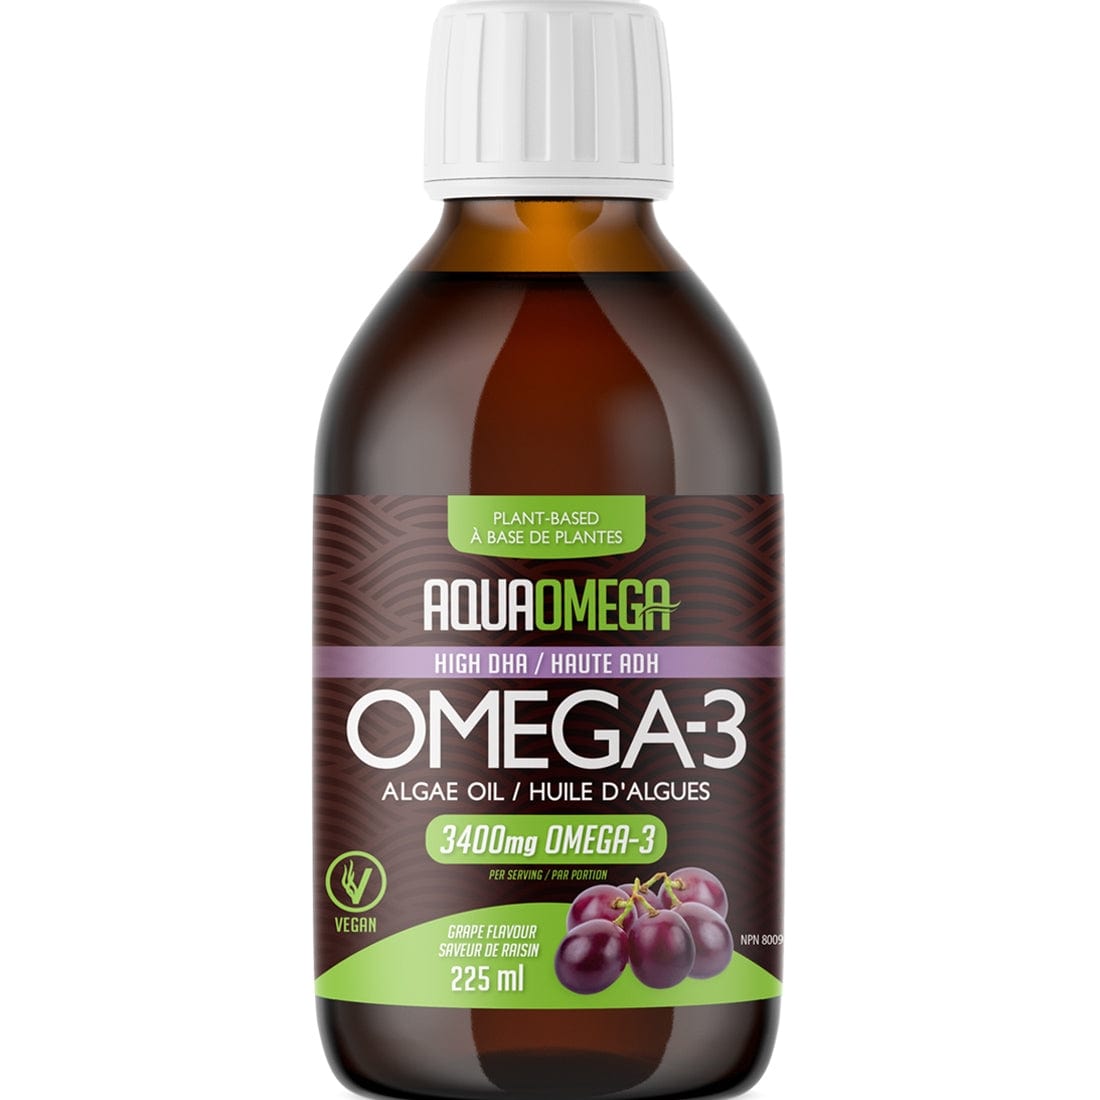 AquaOmega Vegan Algae Oil Omega 3 Liquid, High DHA